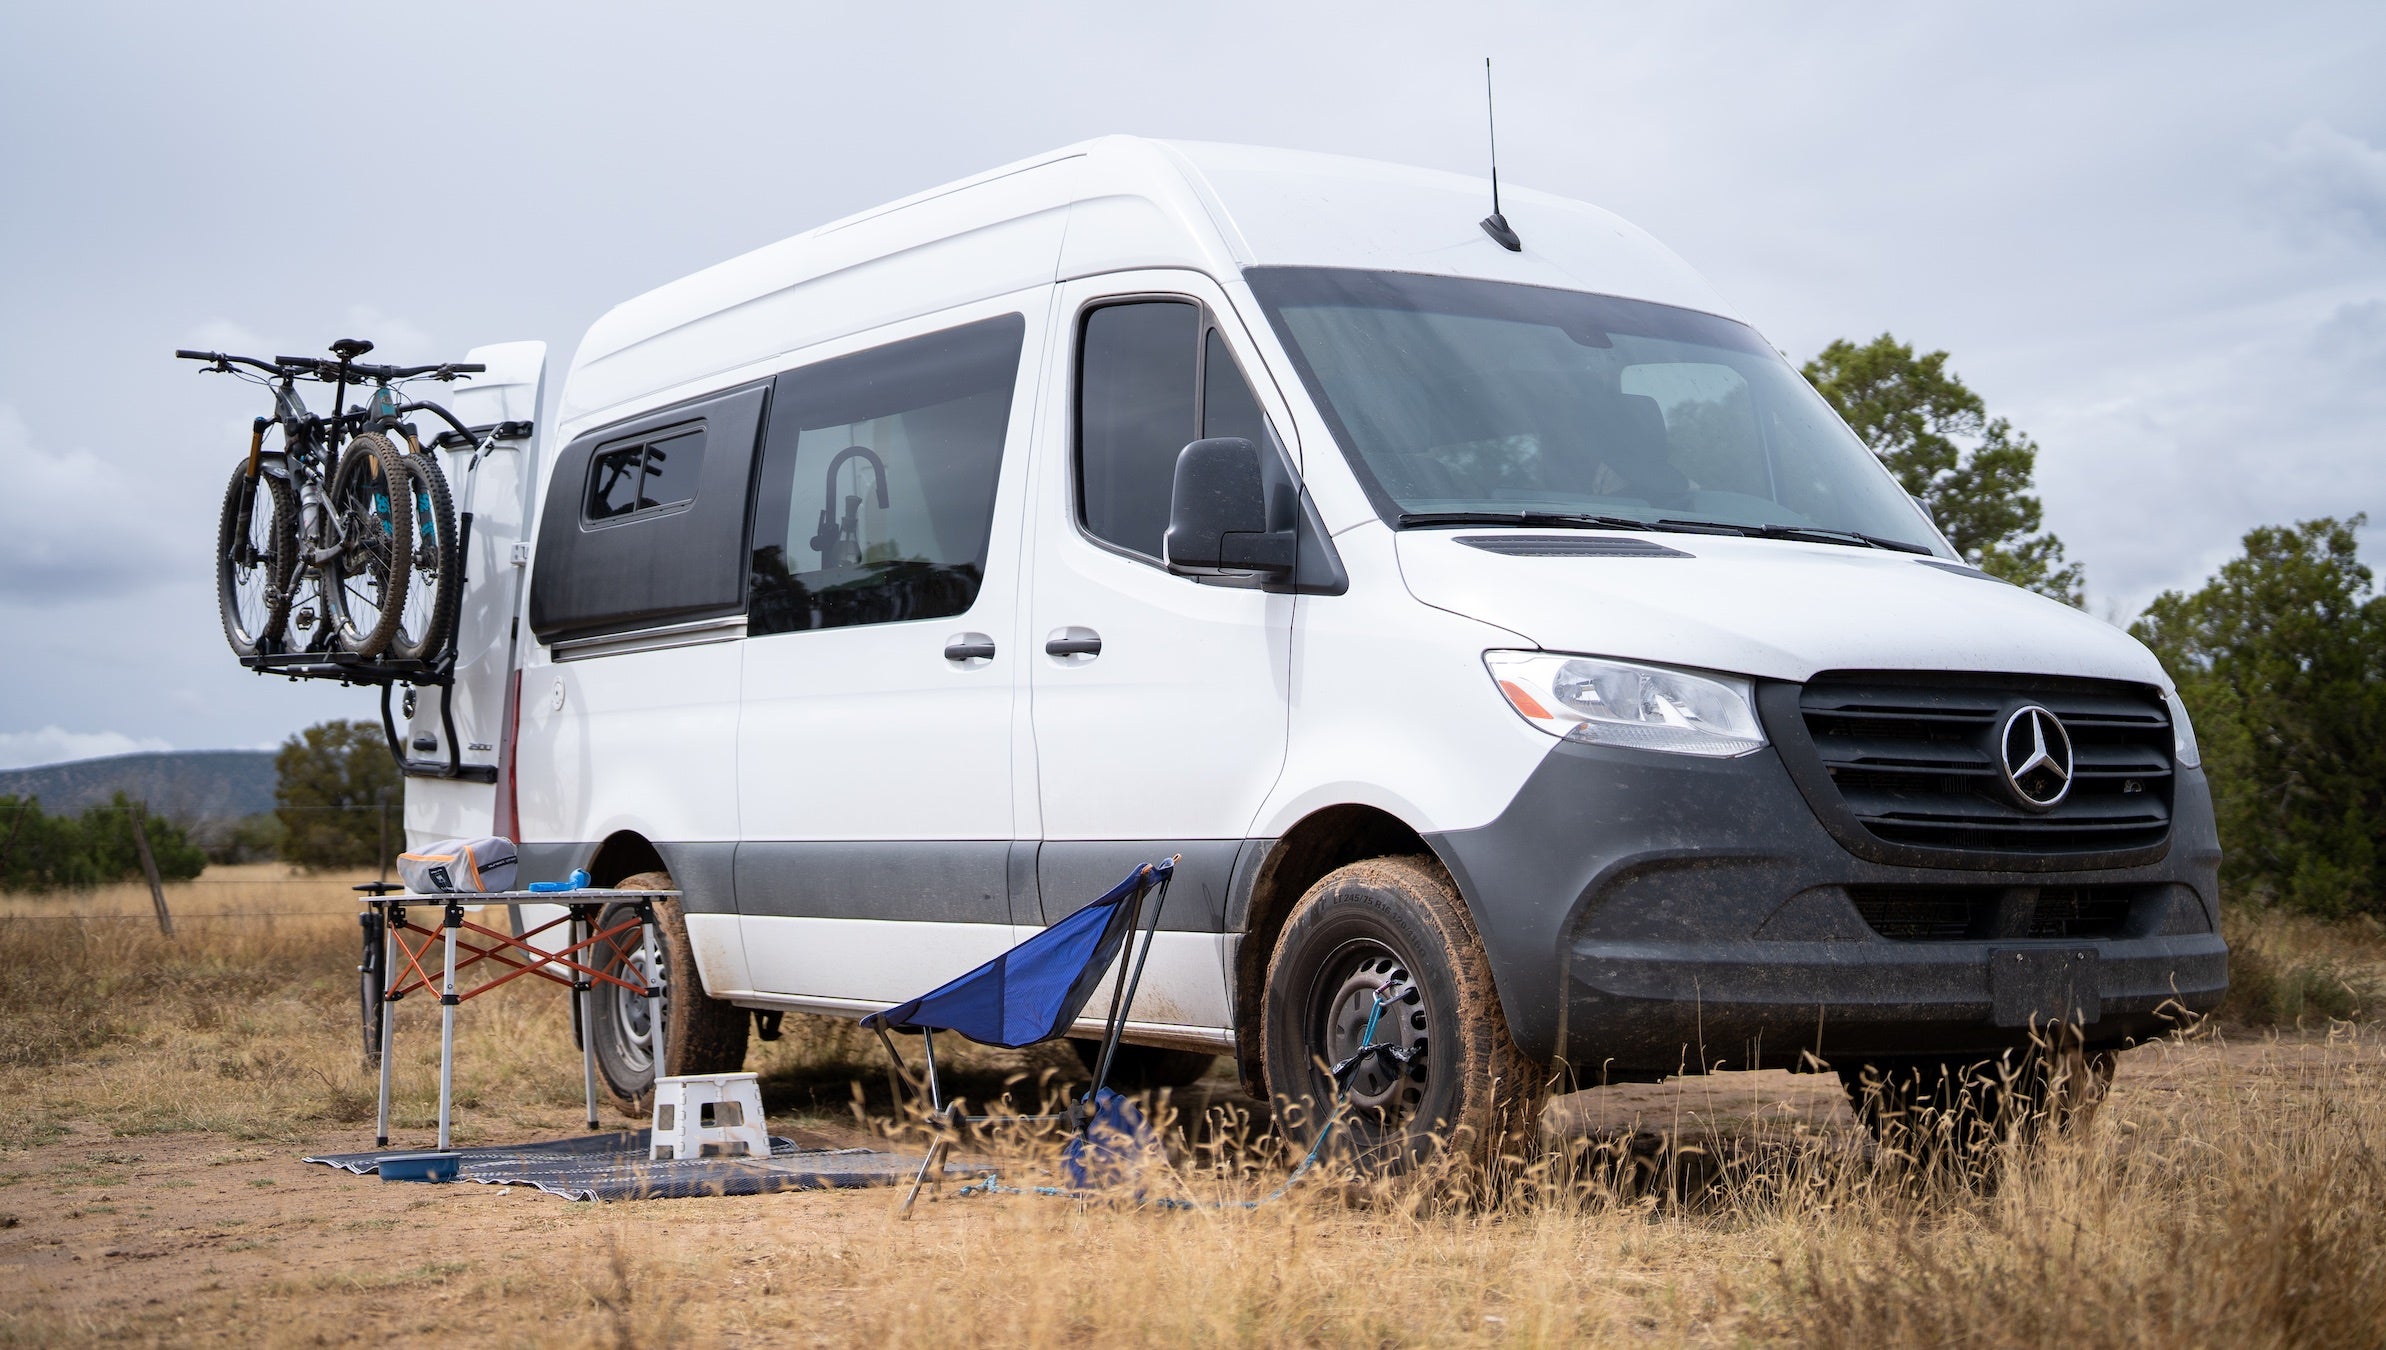 Westfalia pop-up camper vans will soon return to American RV market